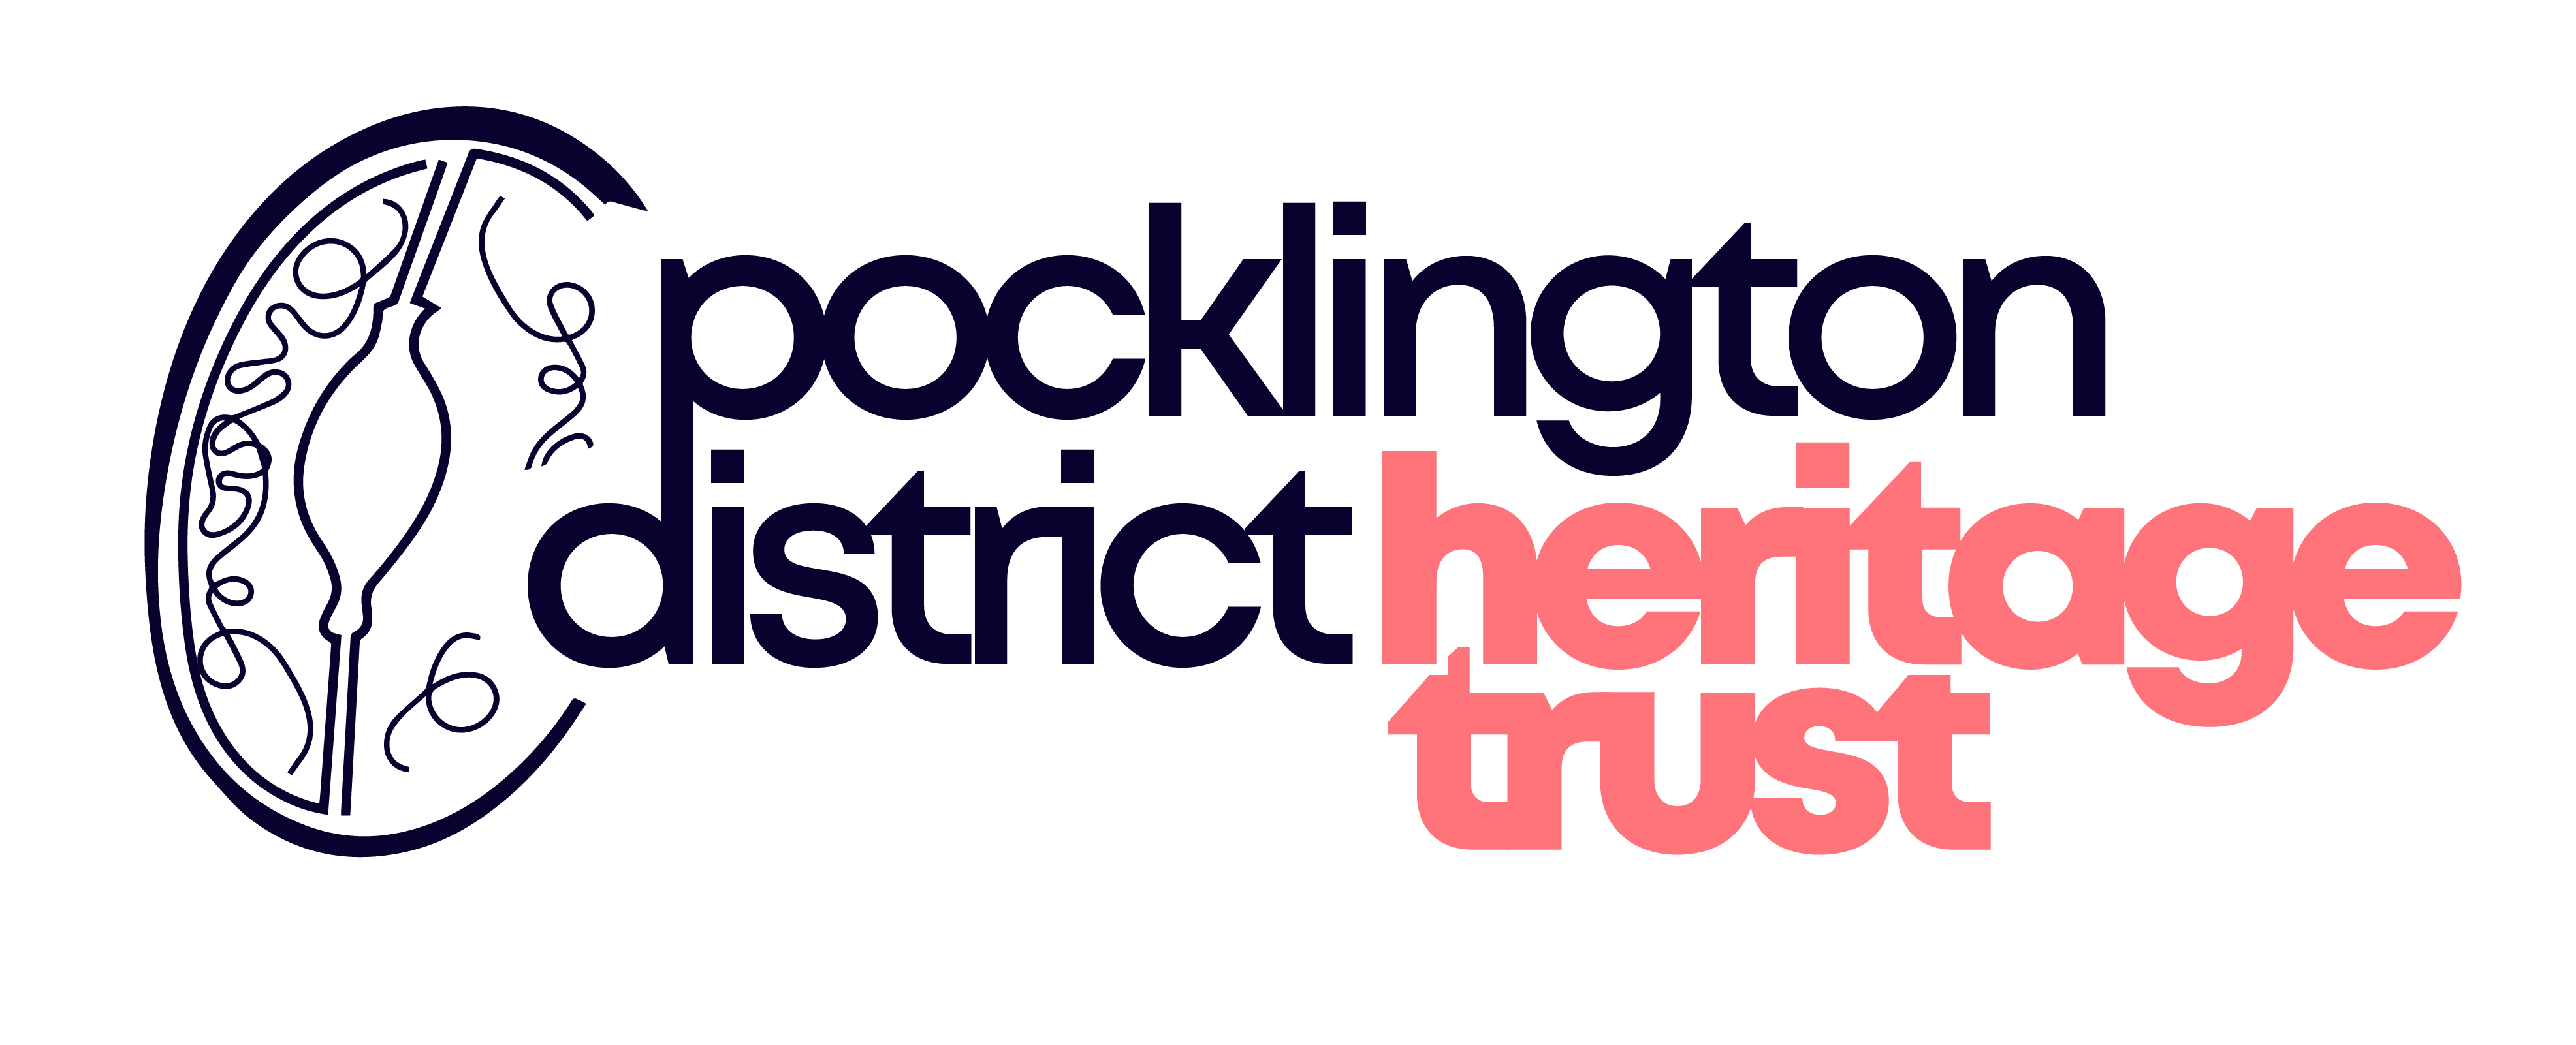 Pocklington District Heritage Trust